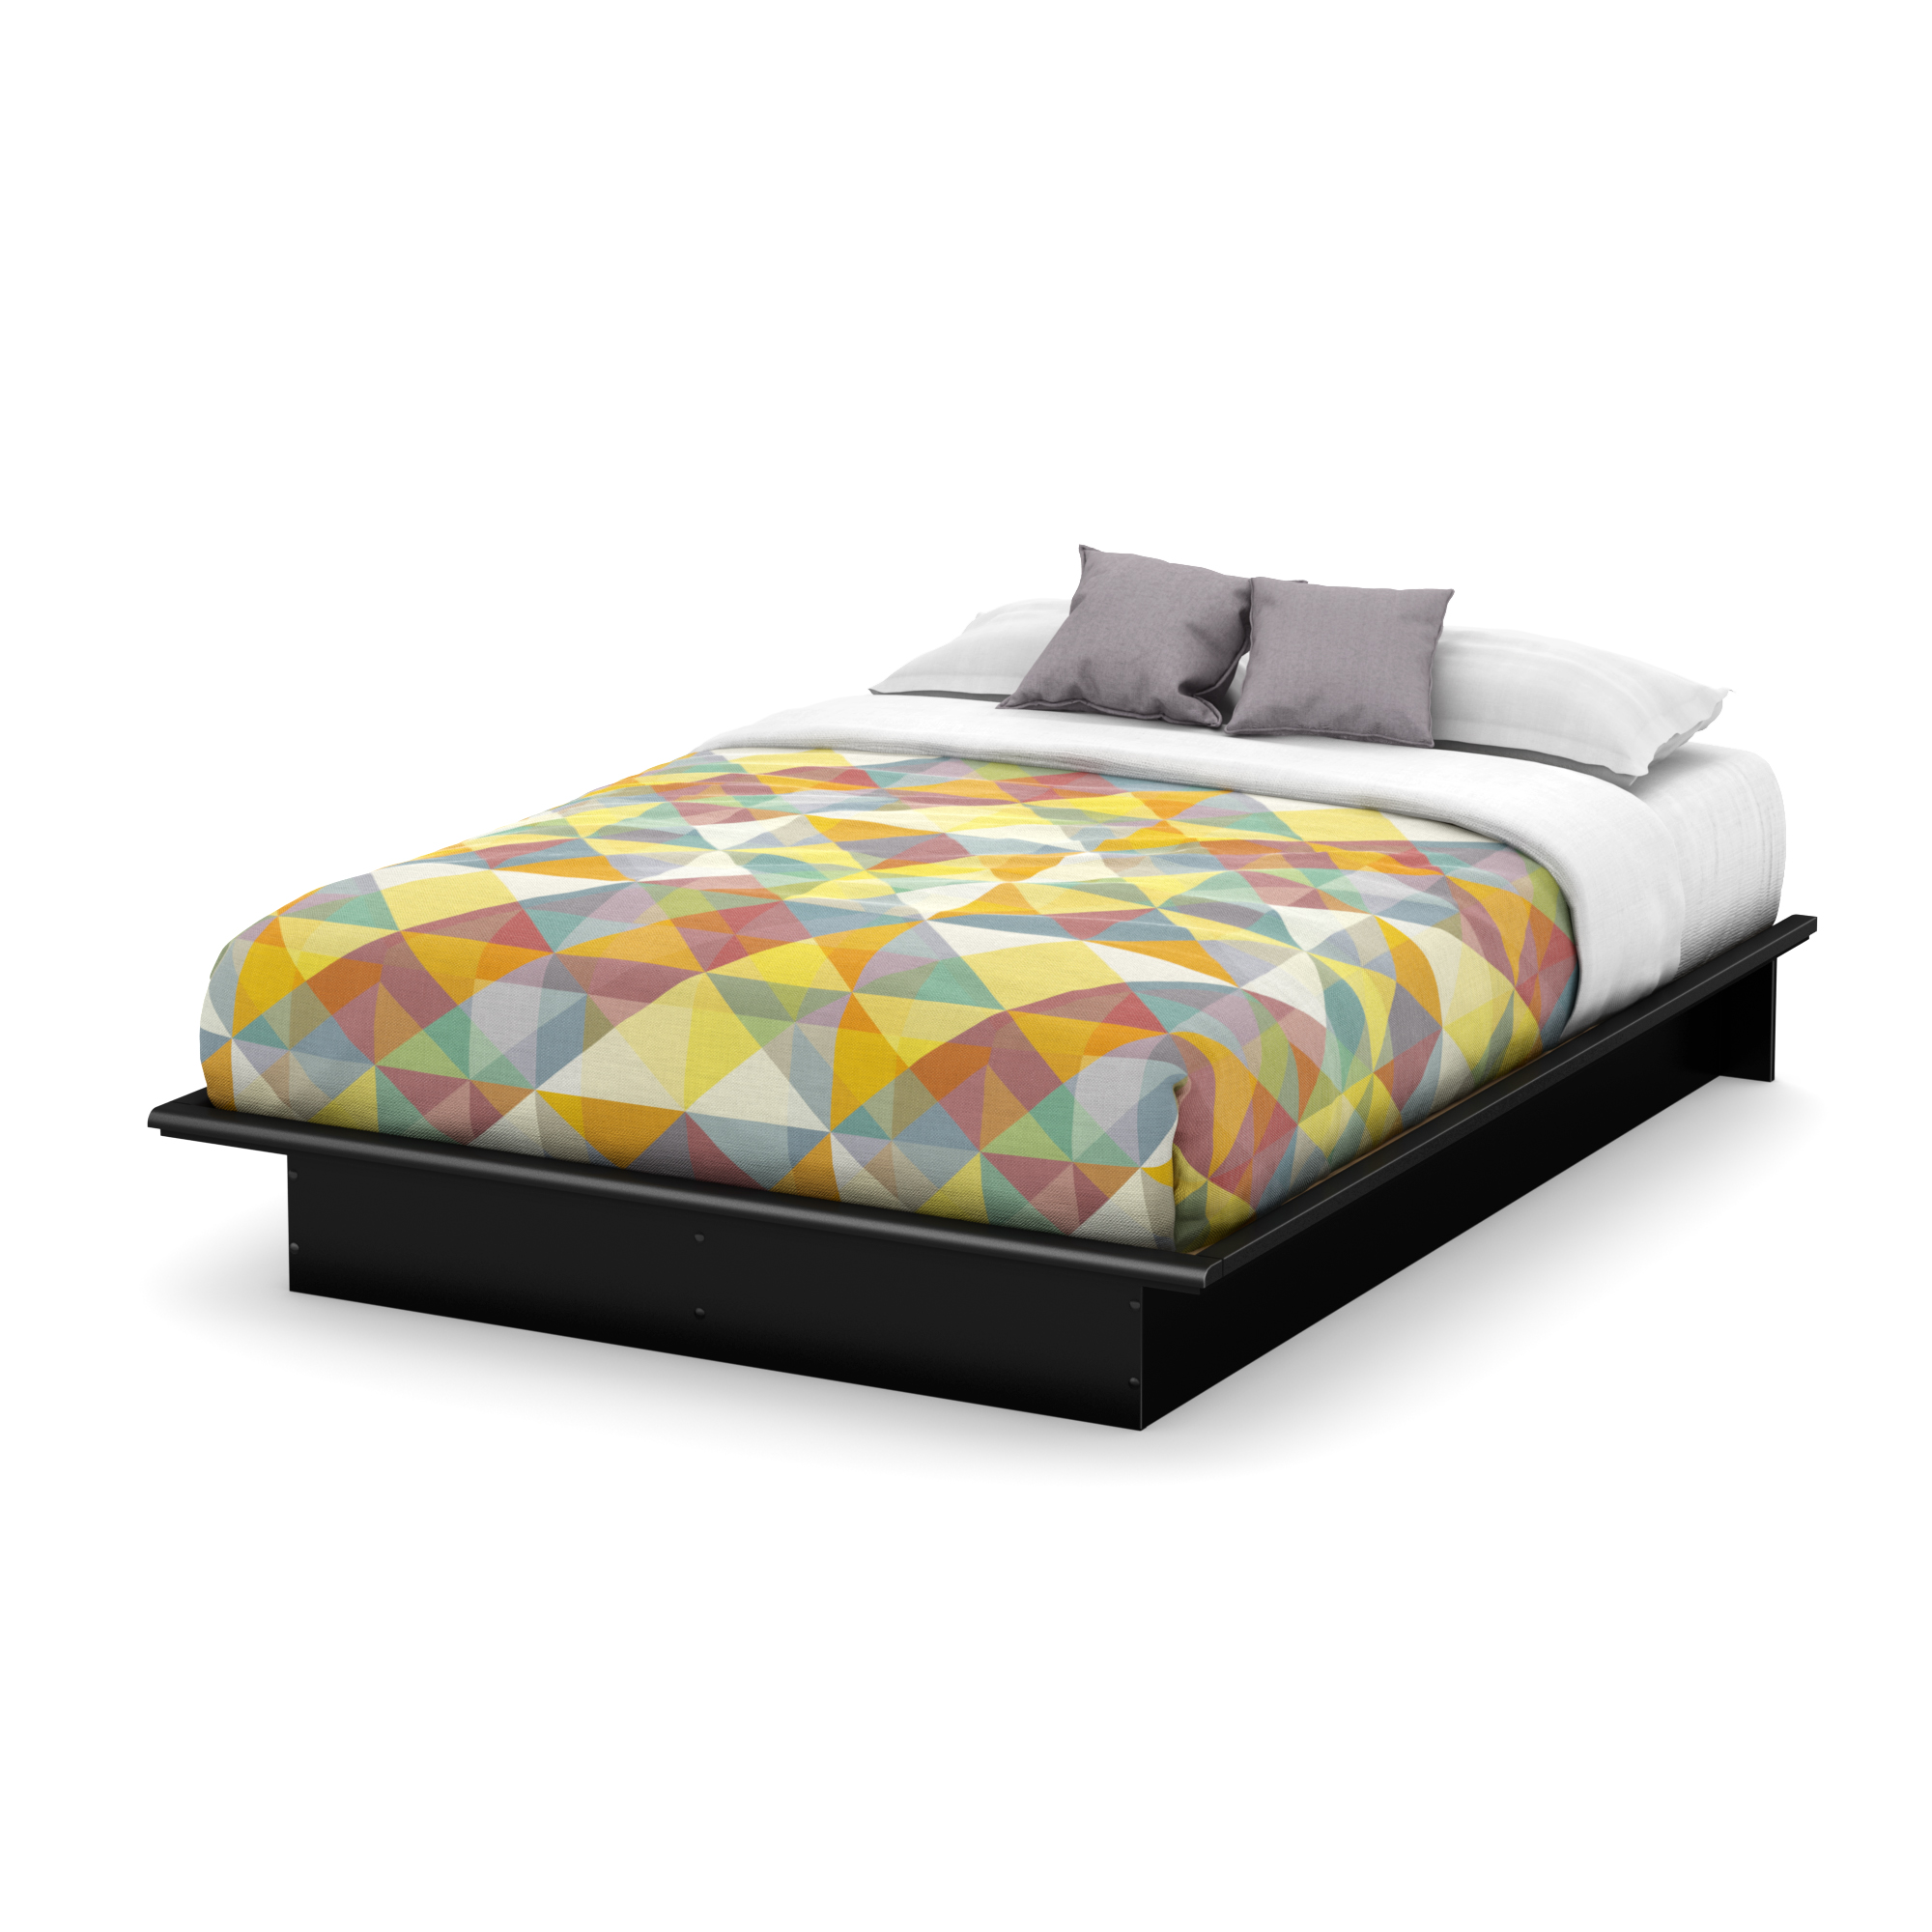 South Shore Basics Platform Bed with Molding, Multiple Sizes and Finishes - image 5 of 7